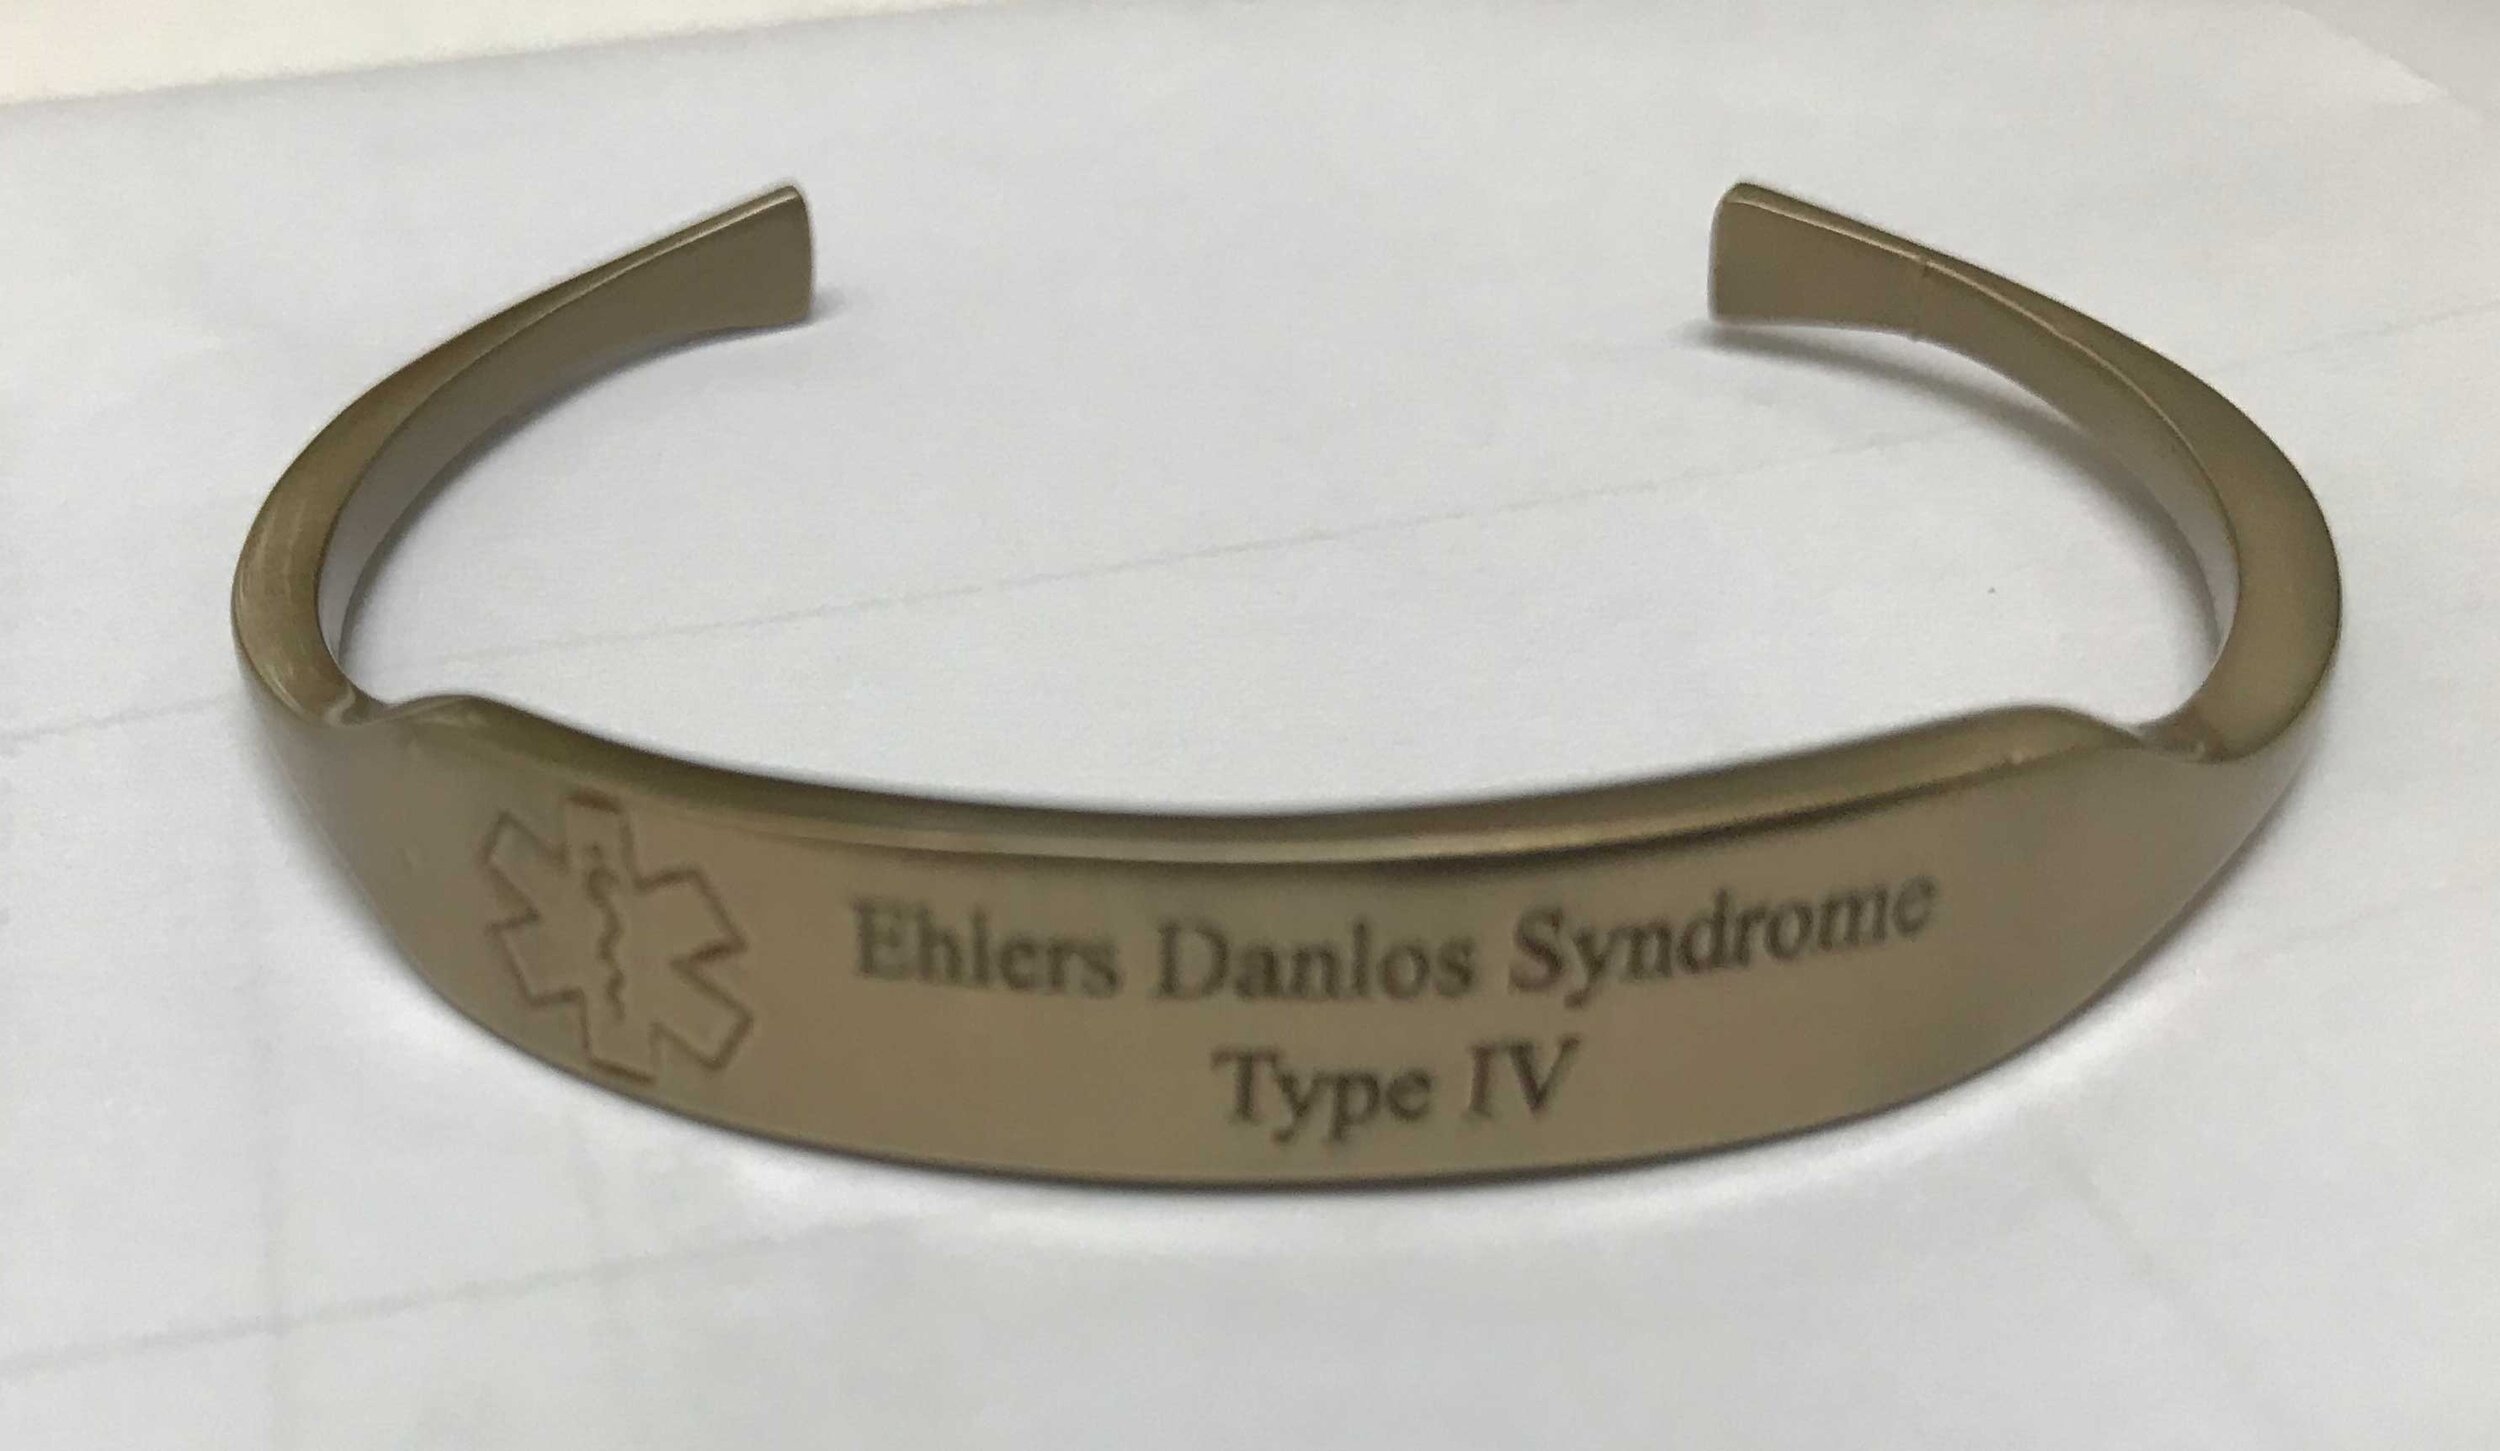 Ehlers_Danlos-Syndrom-Alert.jpeg